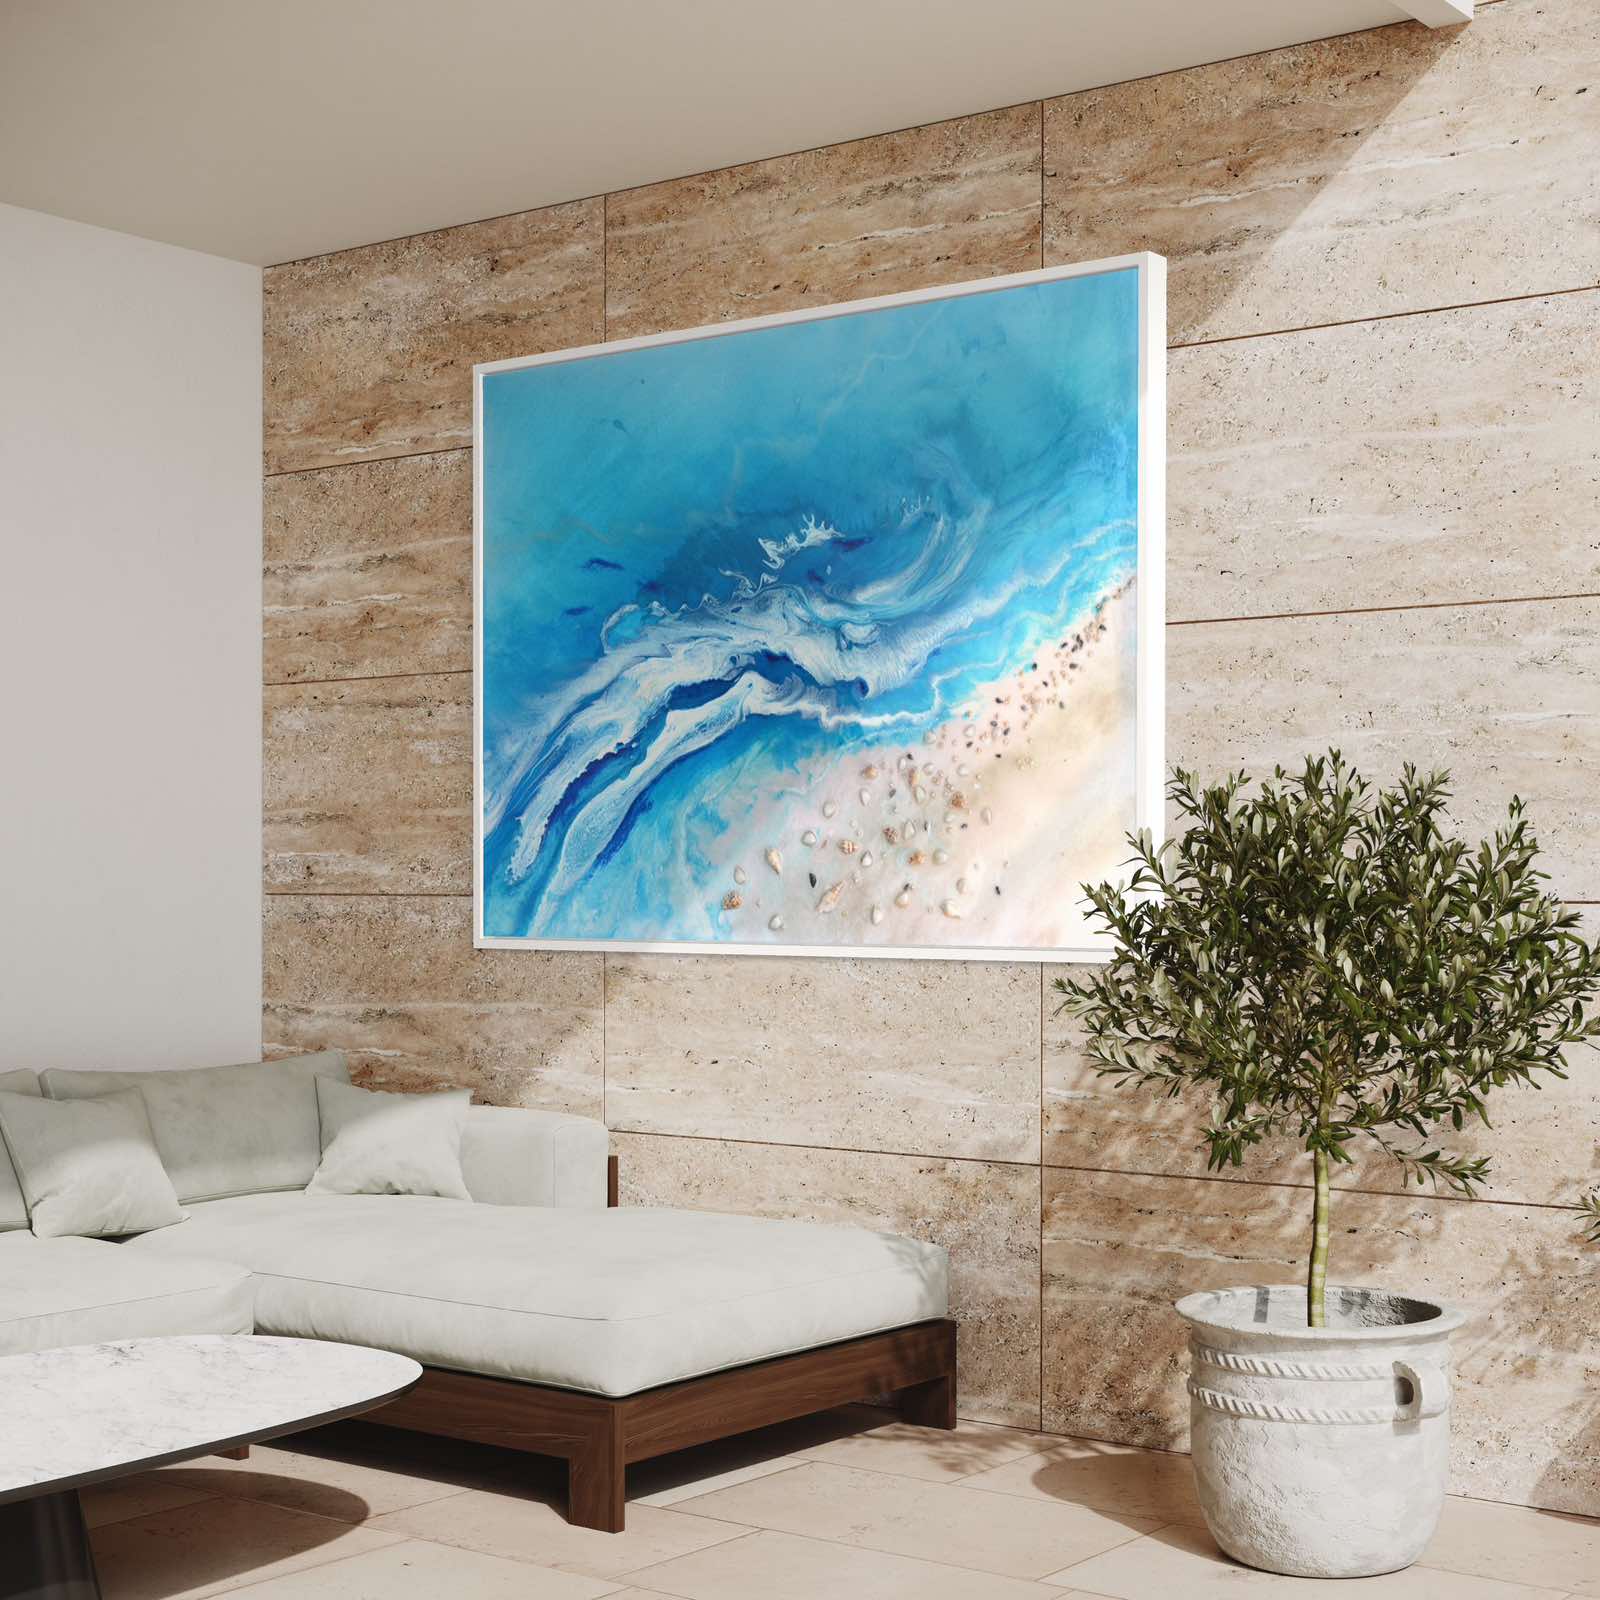 Bali Utopia Ocean Artwork. Limited Edition Print